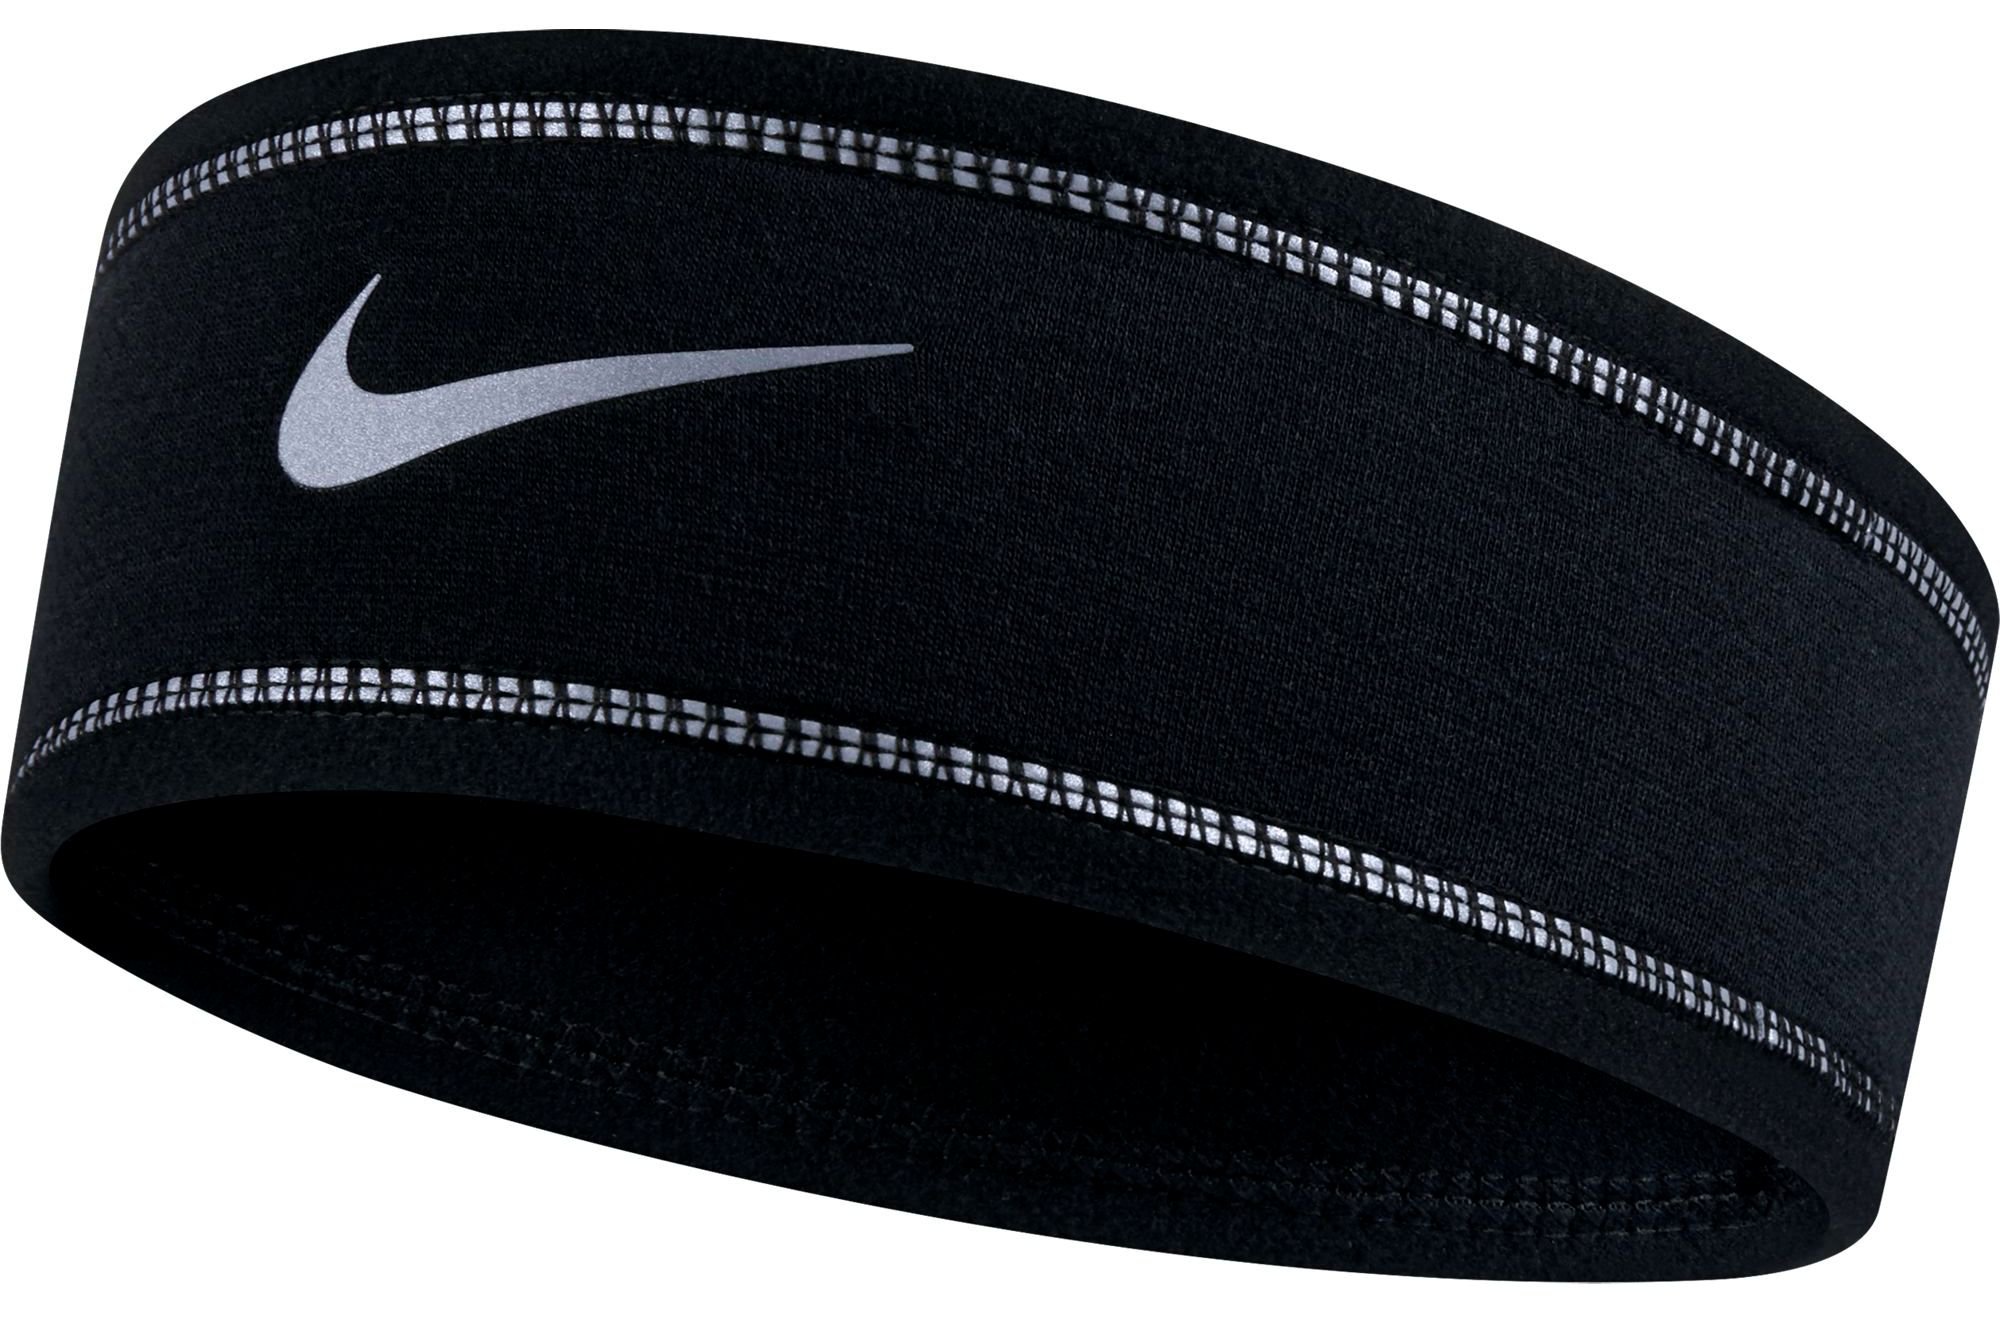 Повязка на голову для бега. Headband Nike. Повязка Nike Headband. Nike Running Headband. Спортмастер повязка Nike.